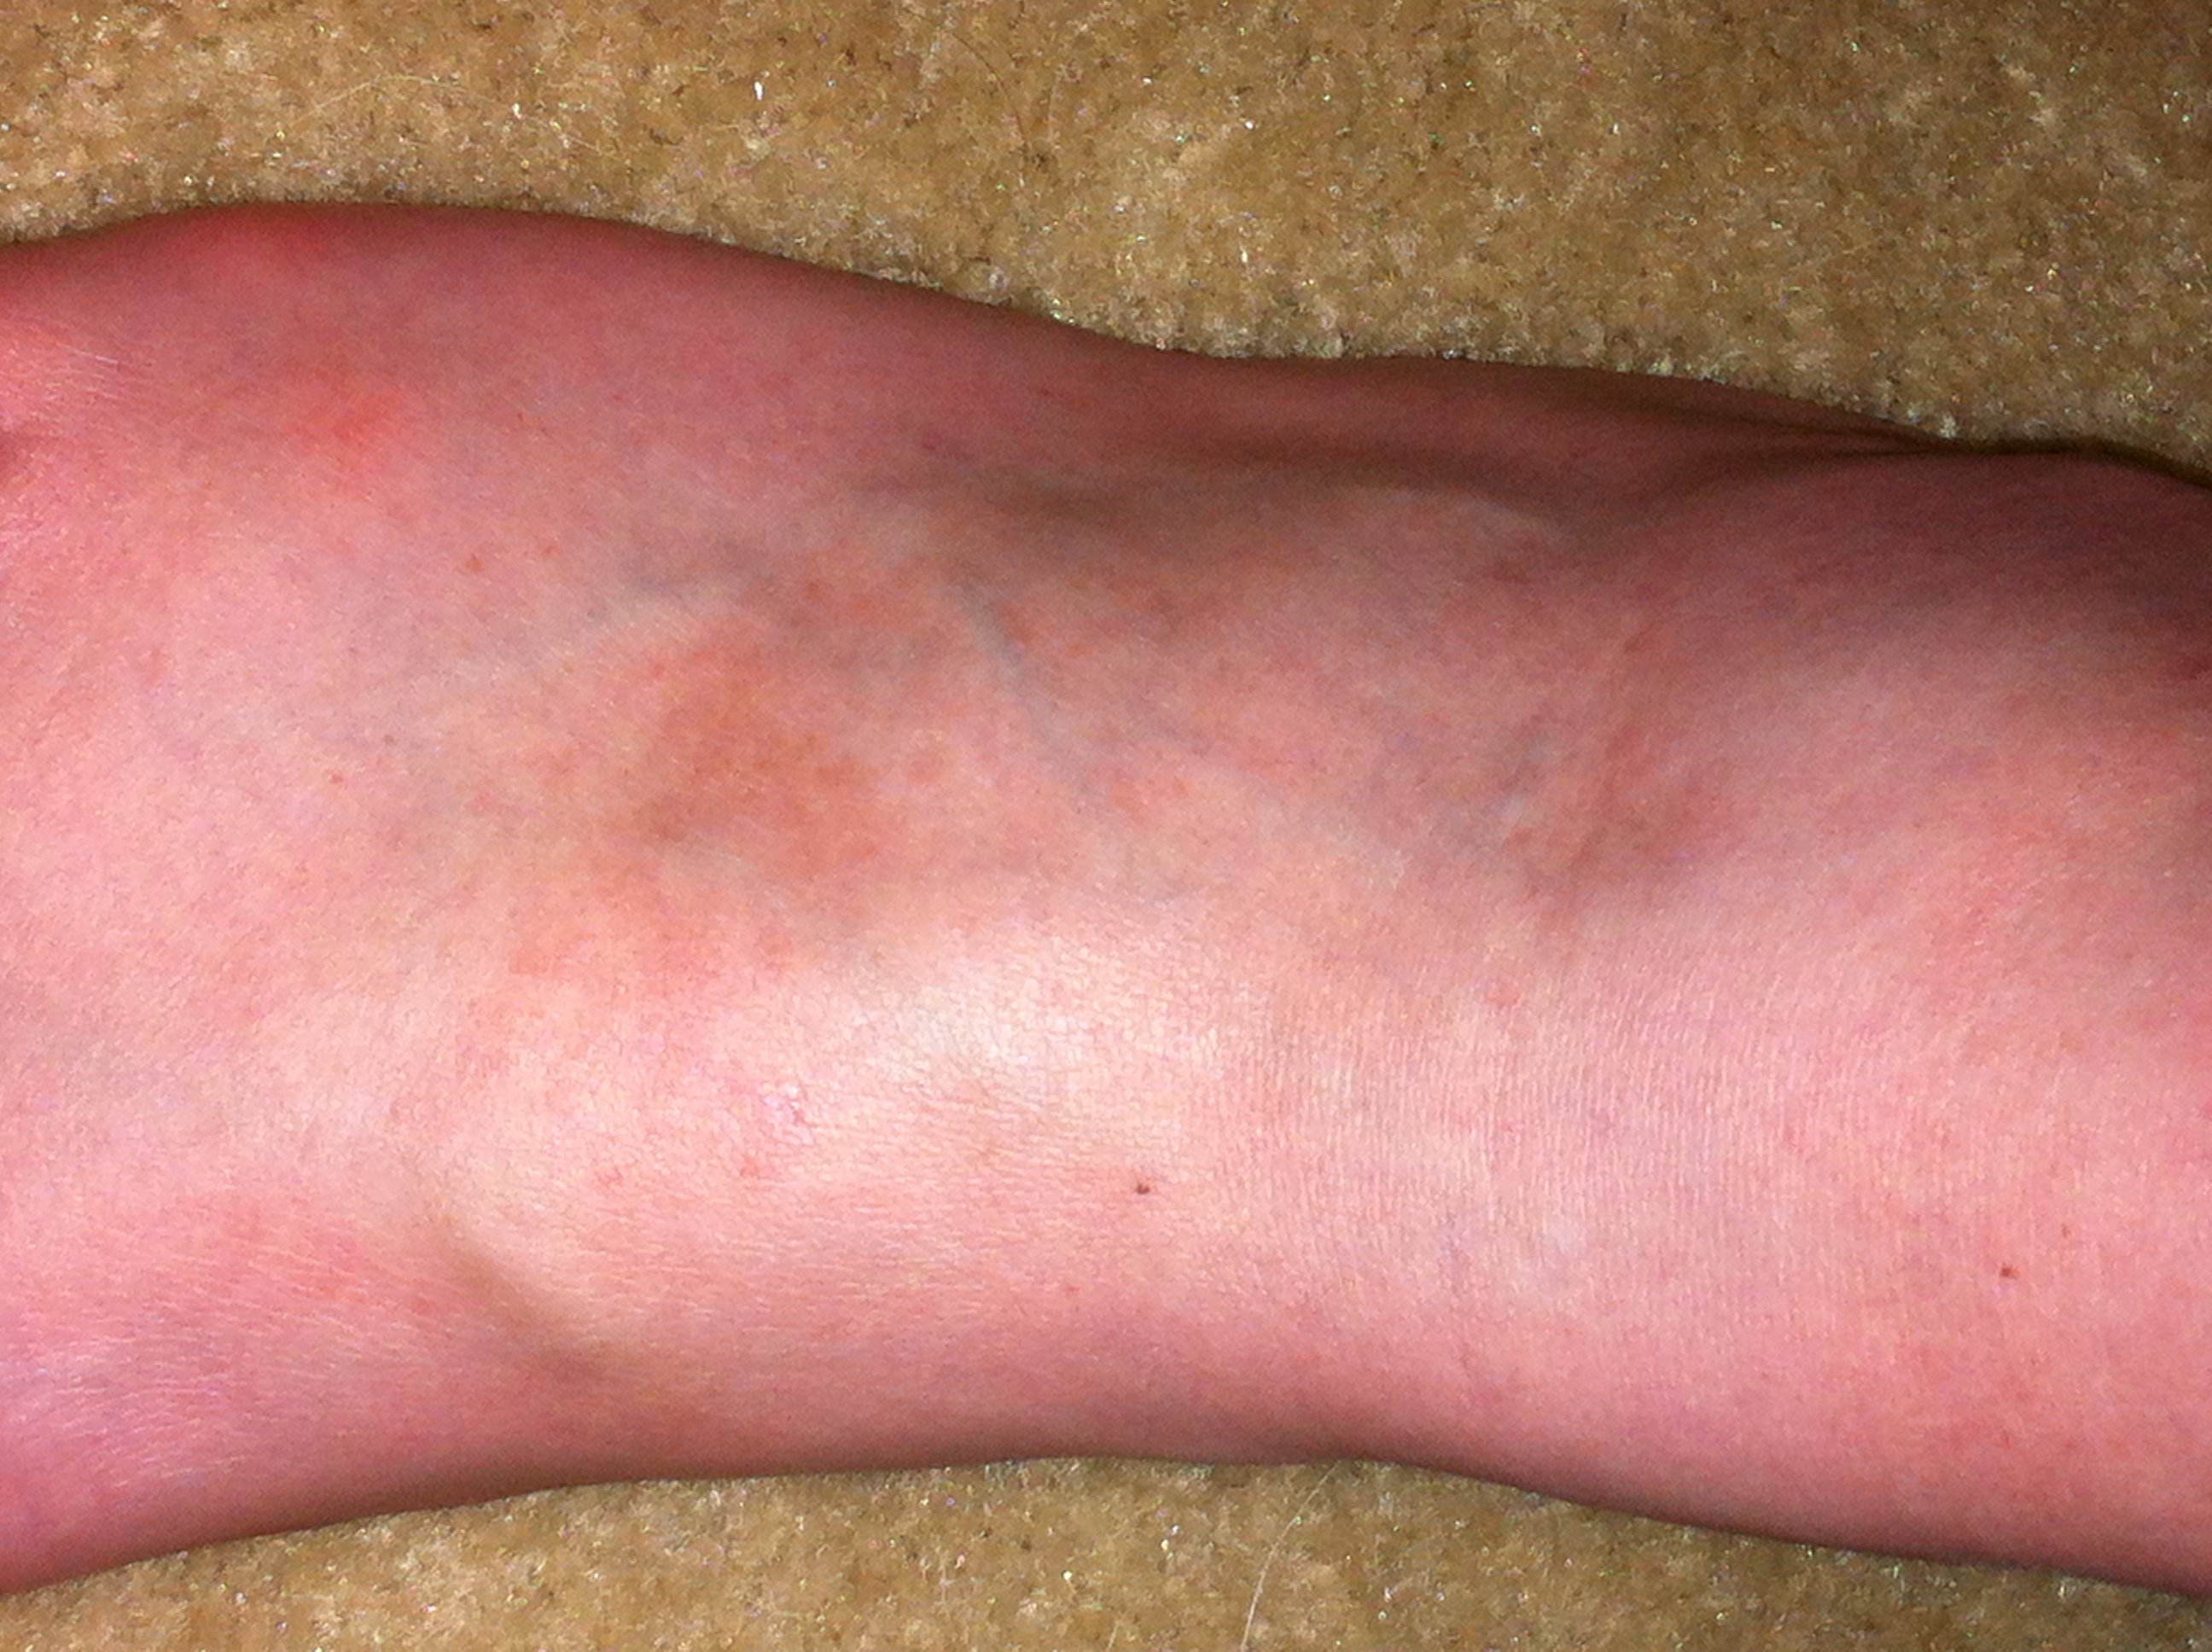 Foot rash - RightDiagnosis.com